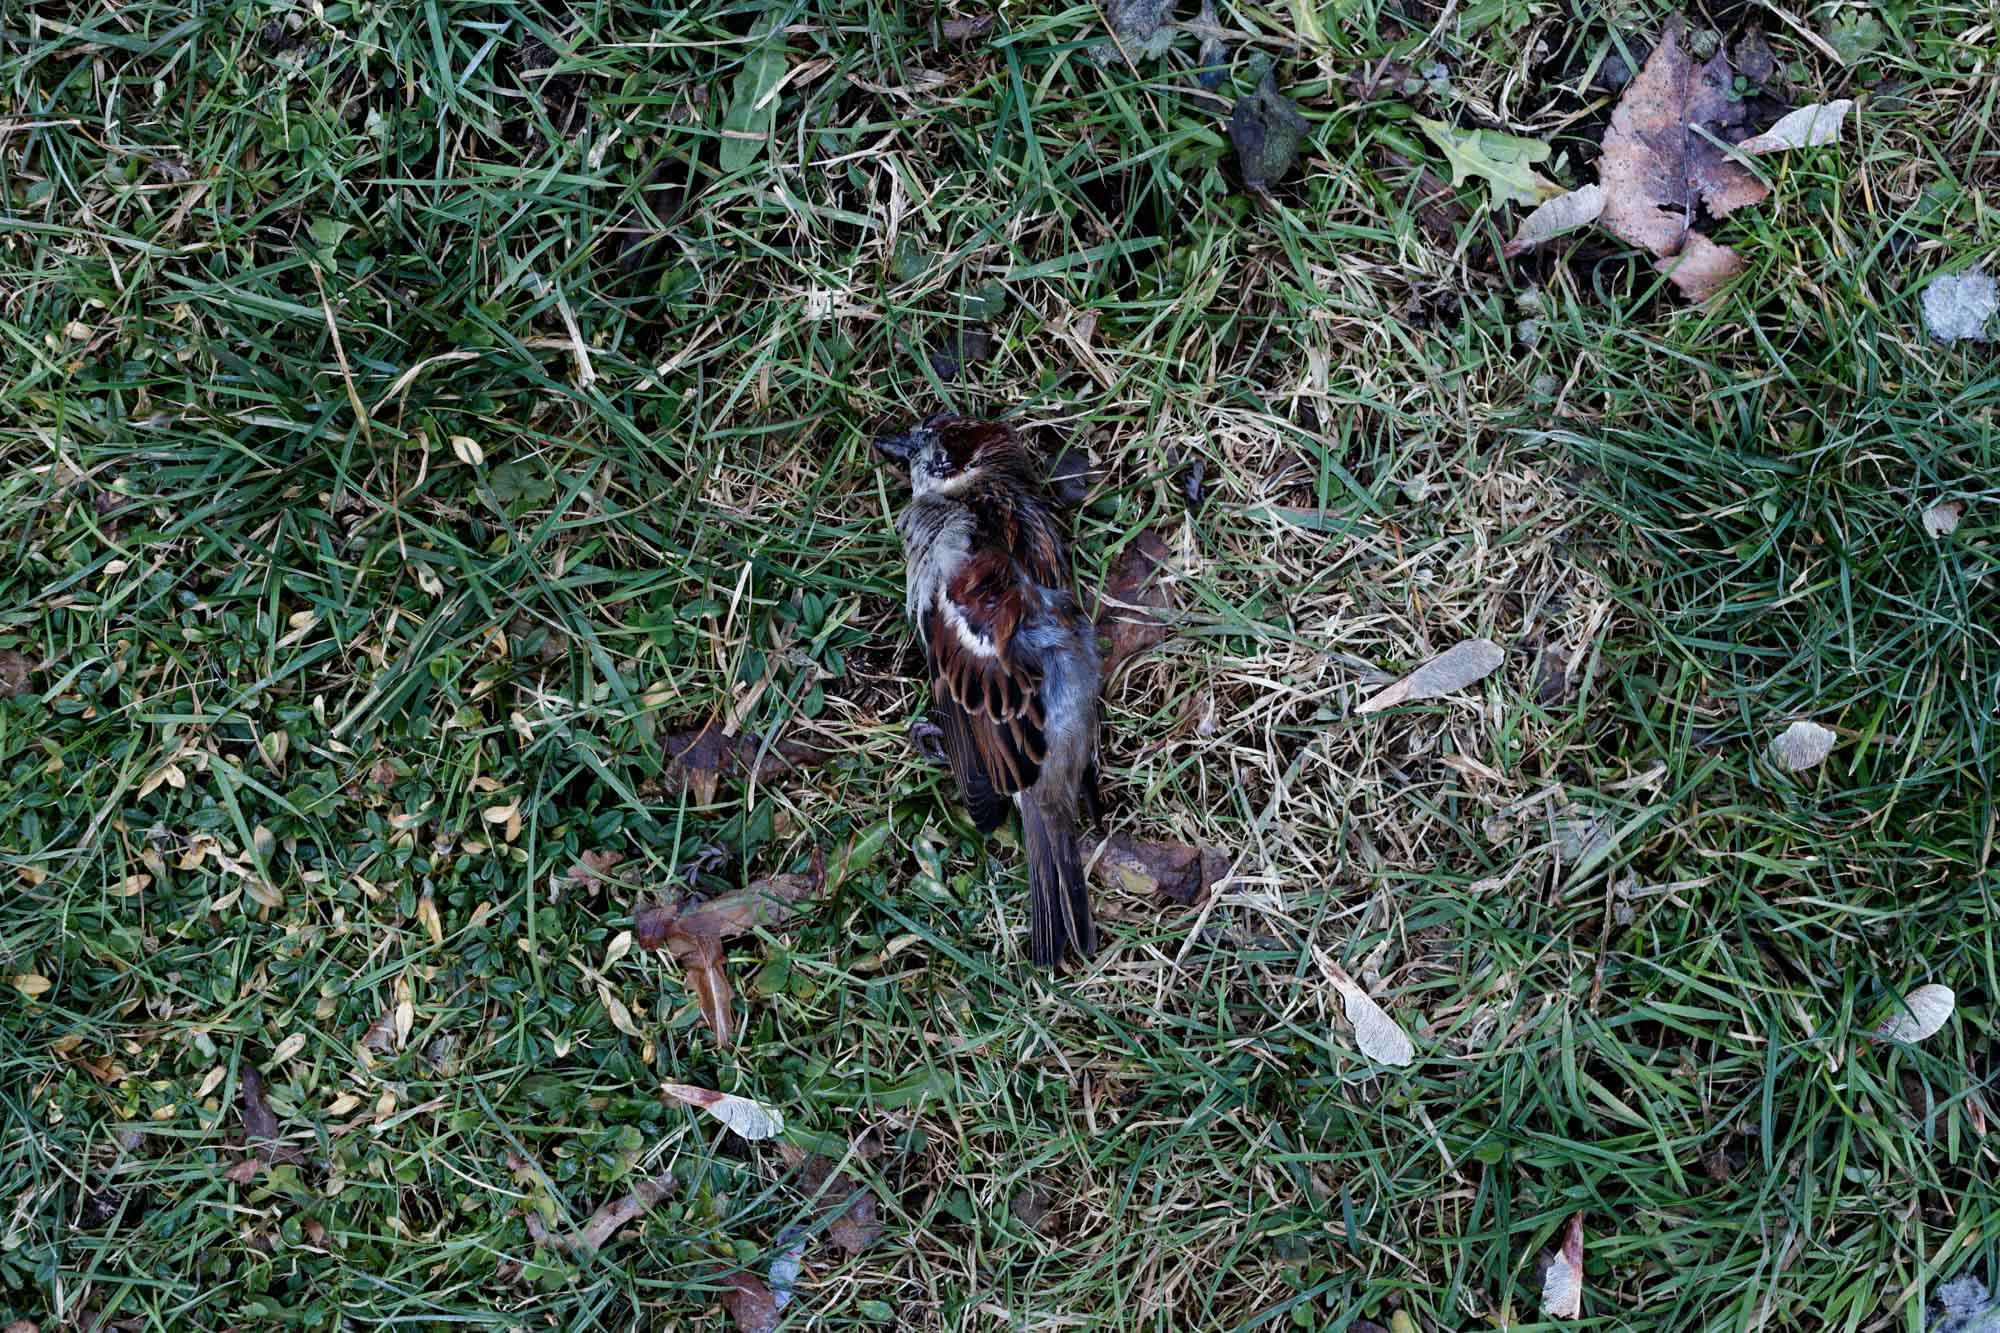 Dead Bird in Grass